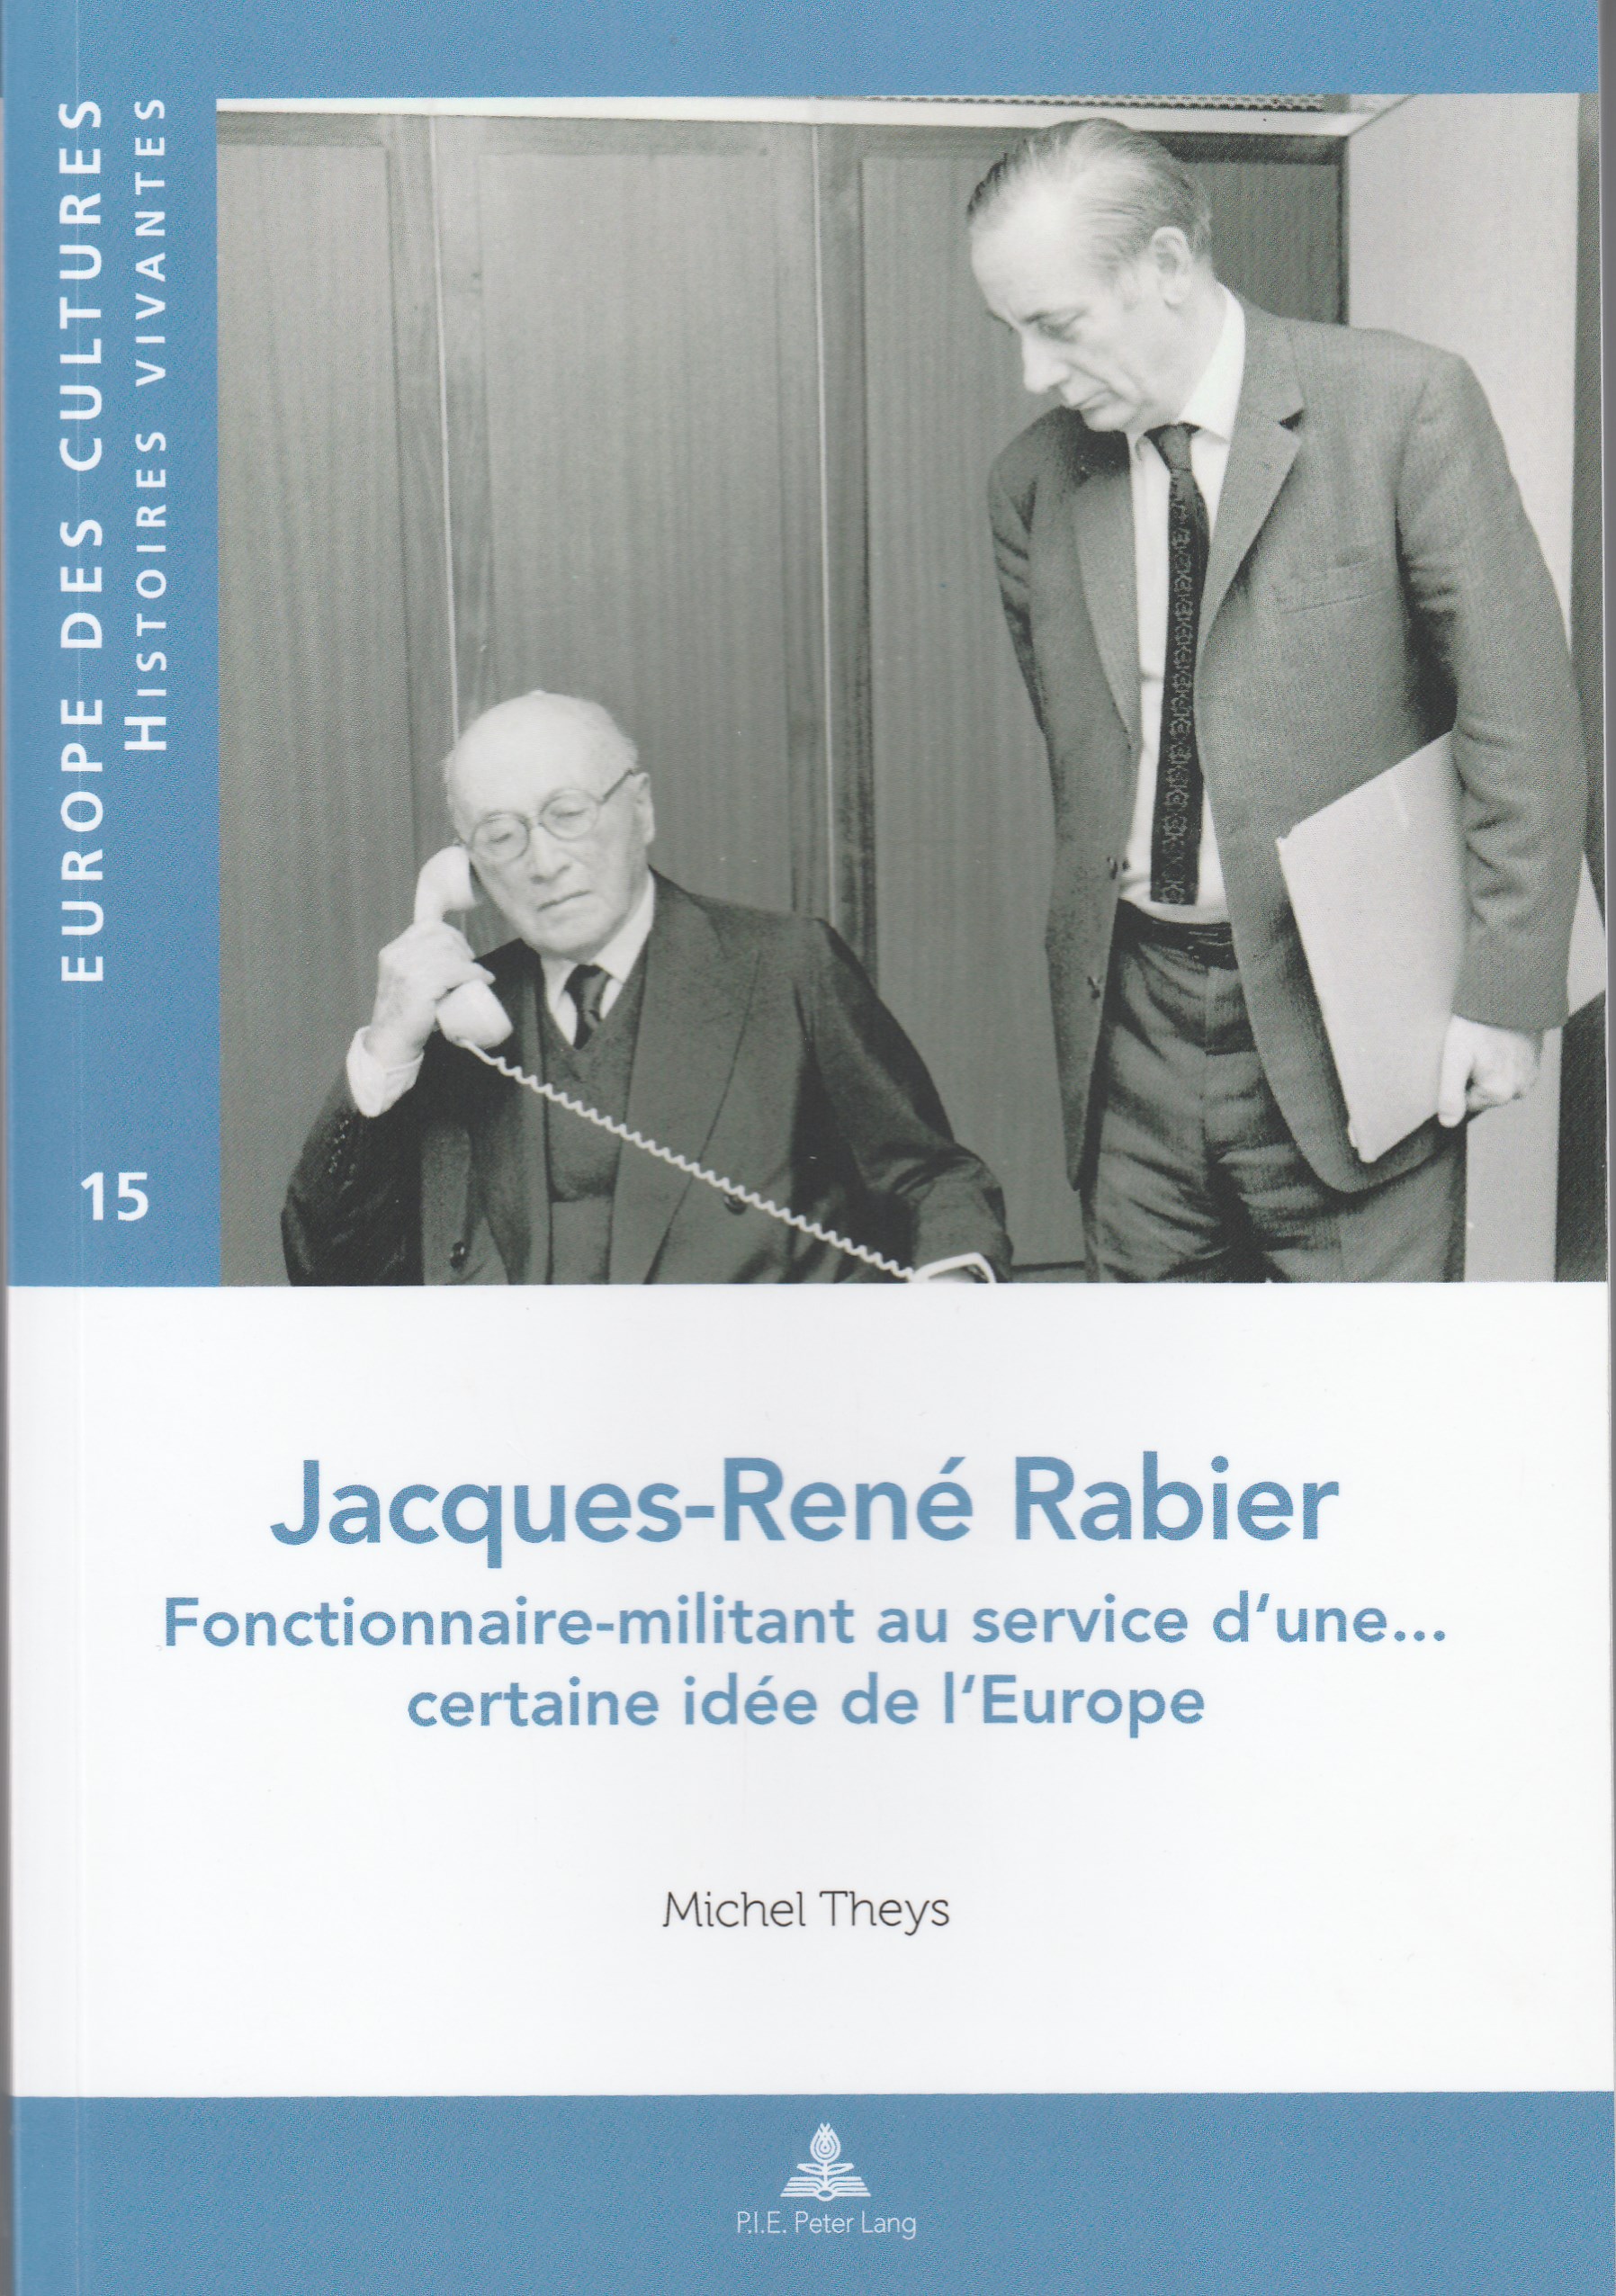 Jacques Ren Rabier 1